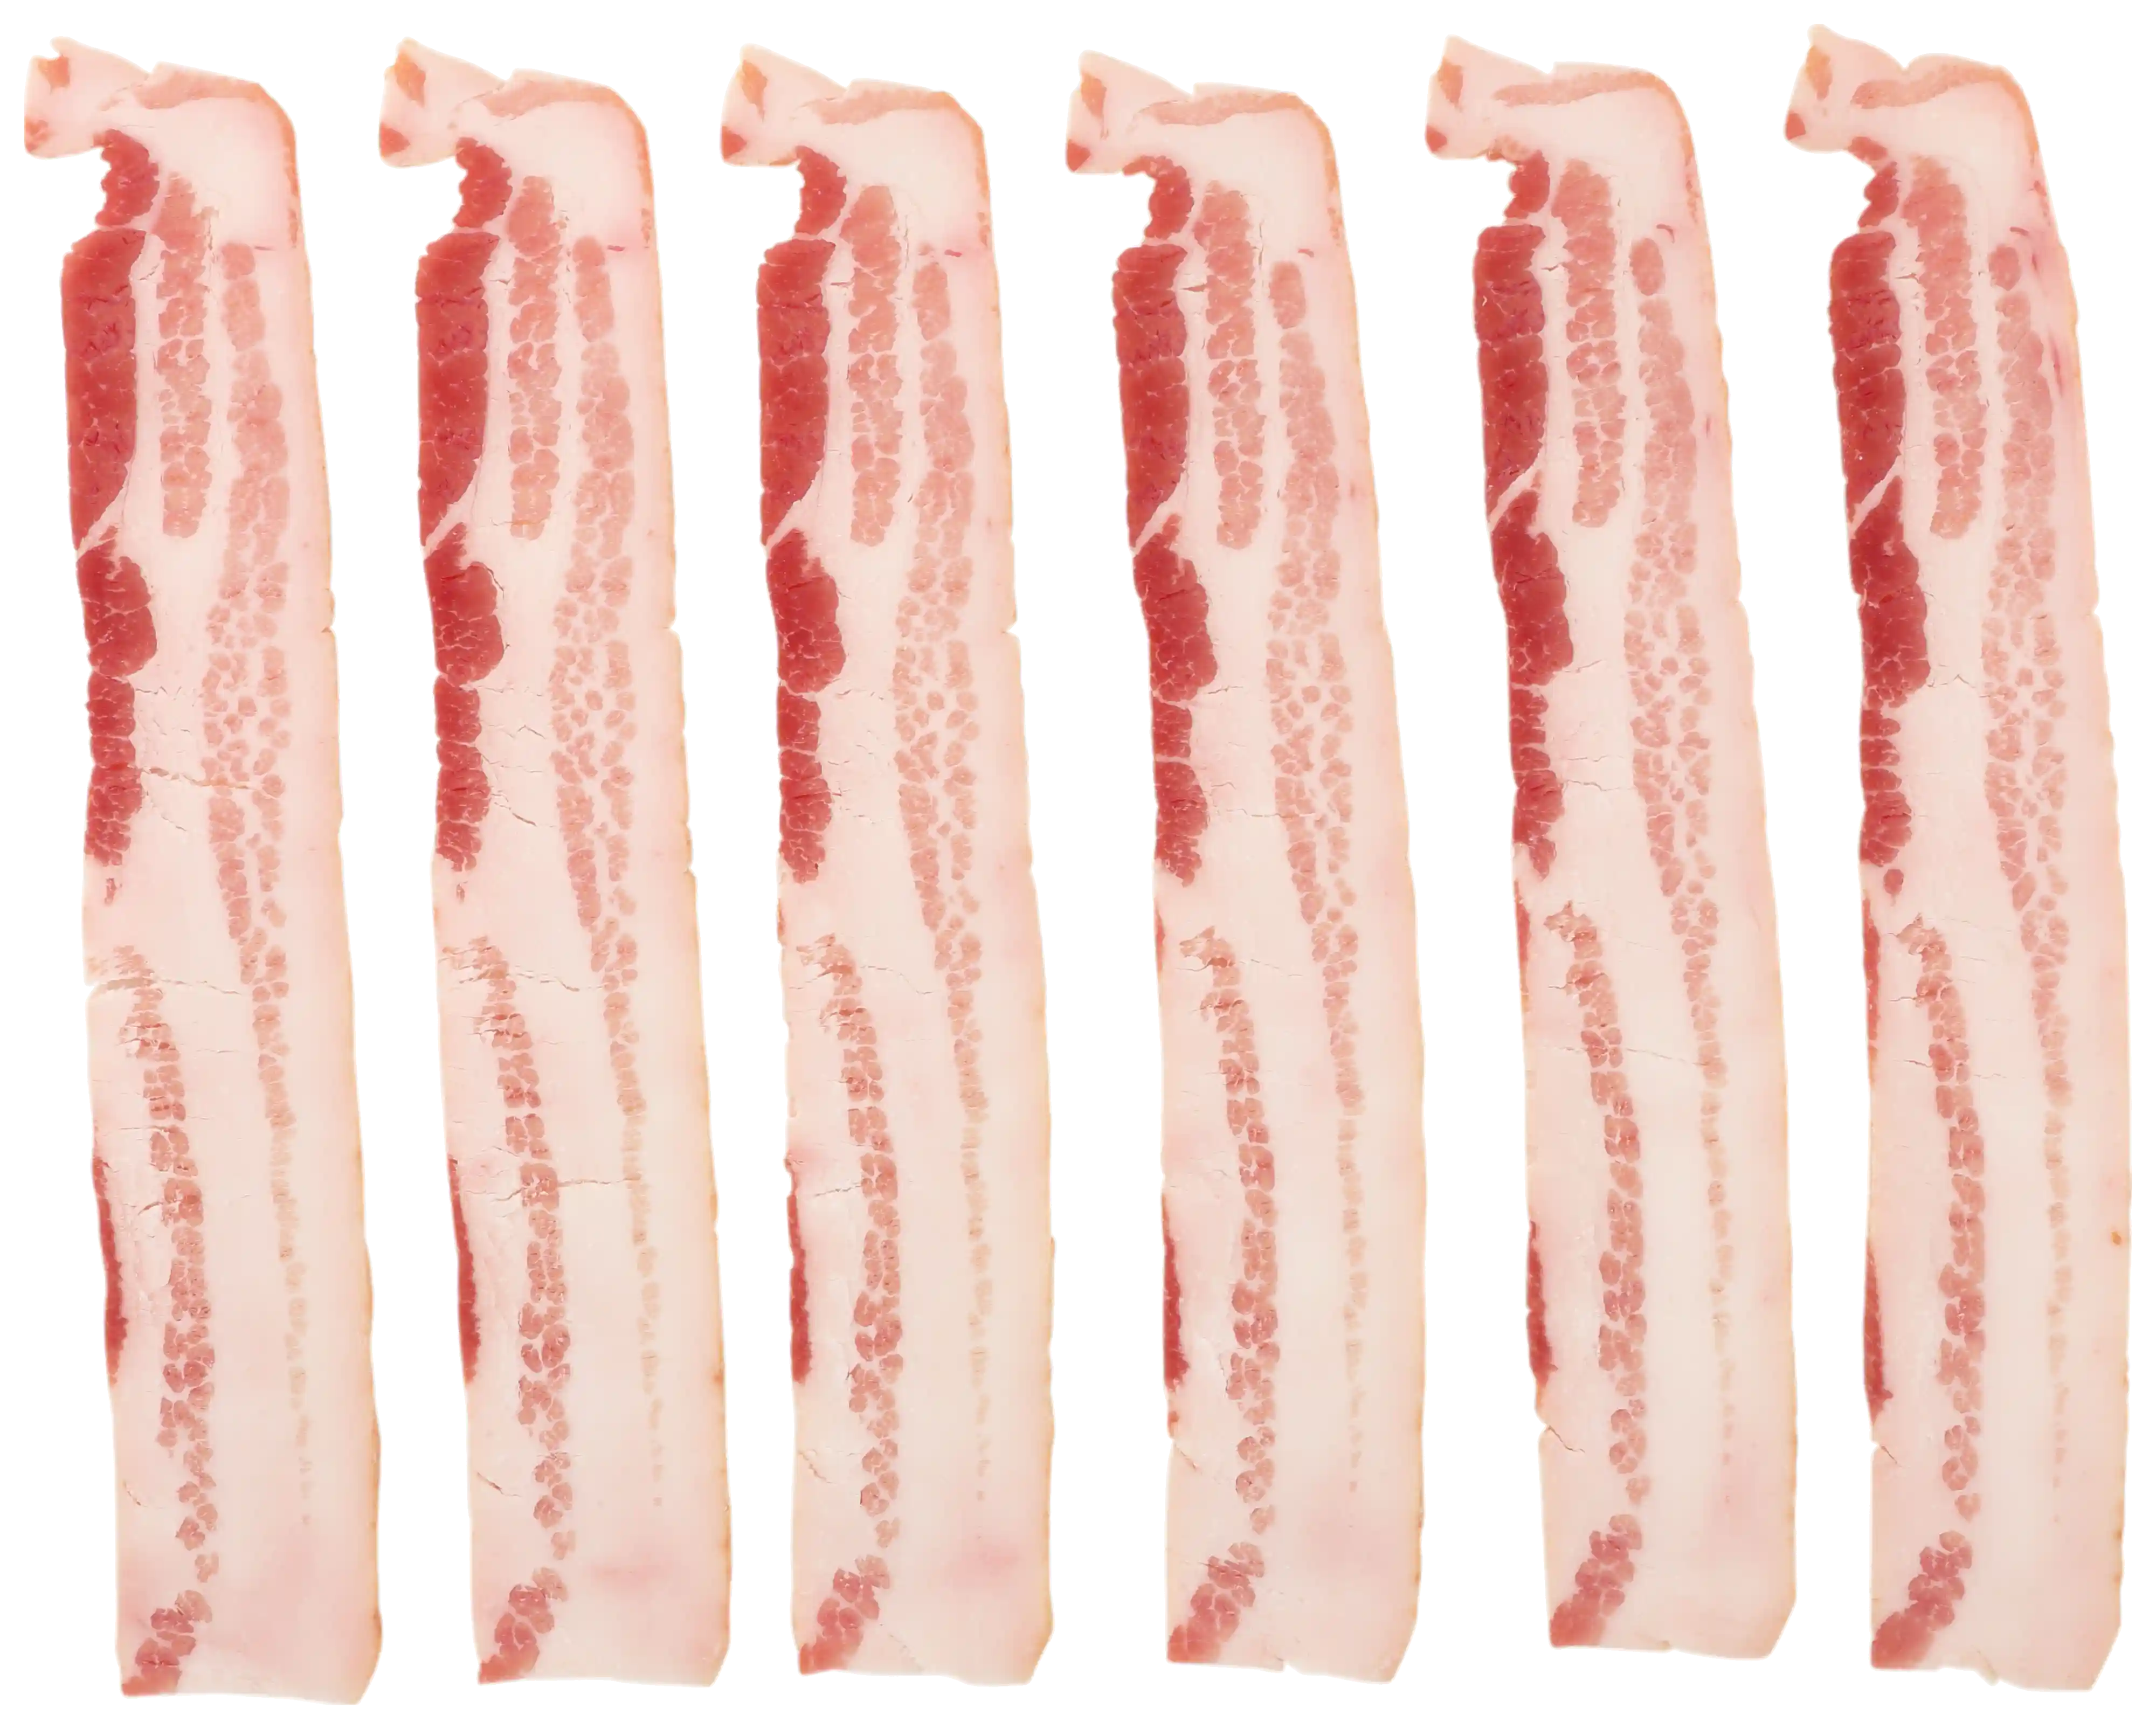 Wright® Naturally Hickory Smoked Bulk Bacon 9 slices per inch_image_21